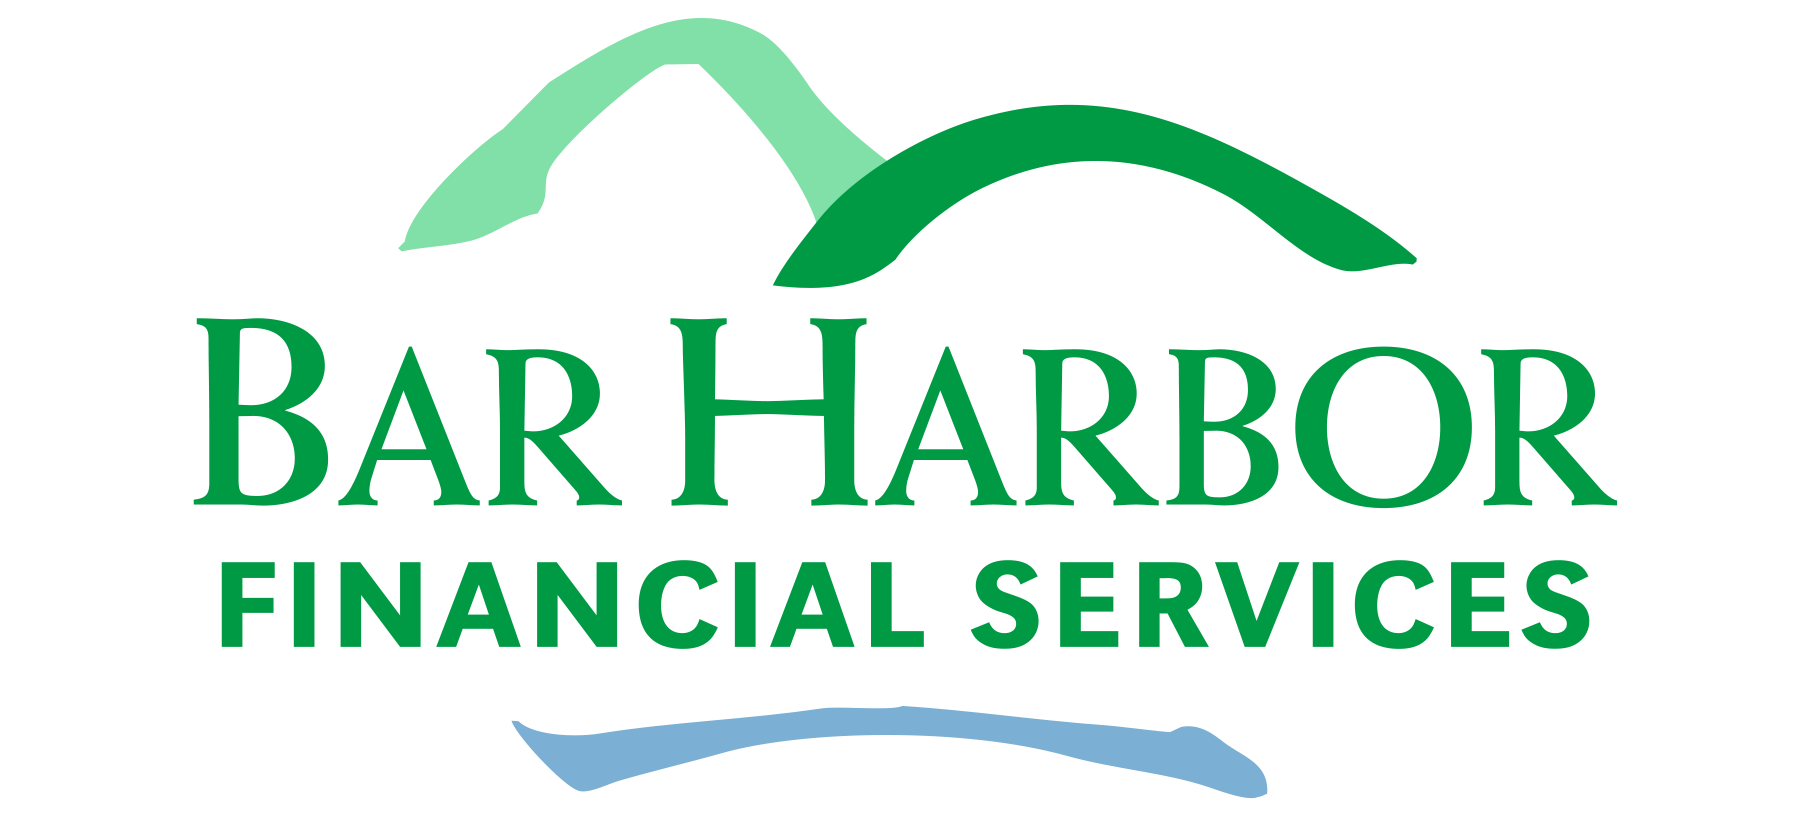 Bar Harbor Financial Services